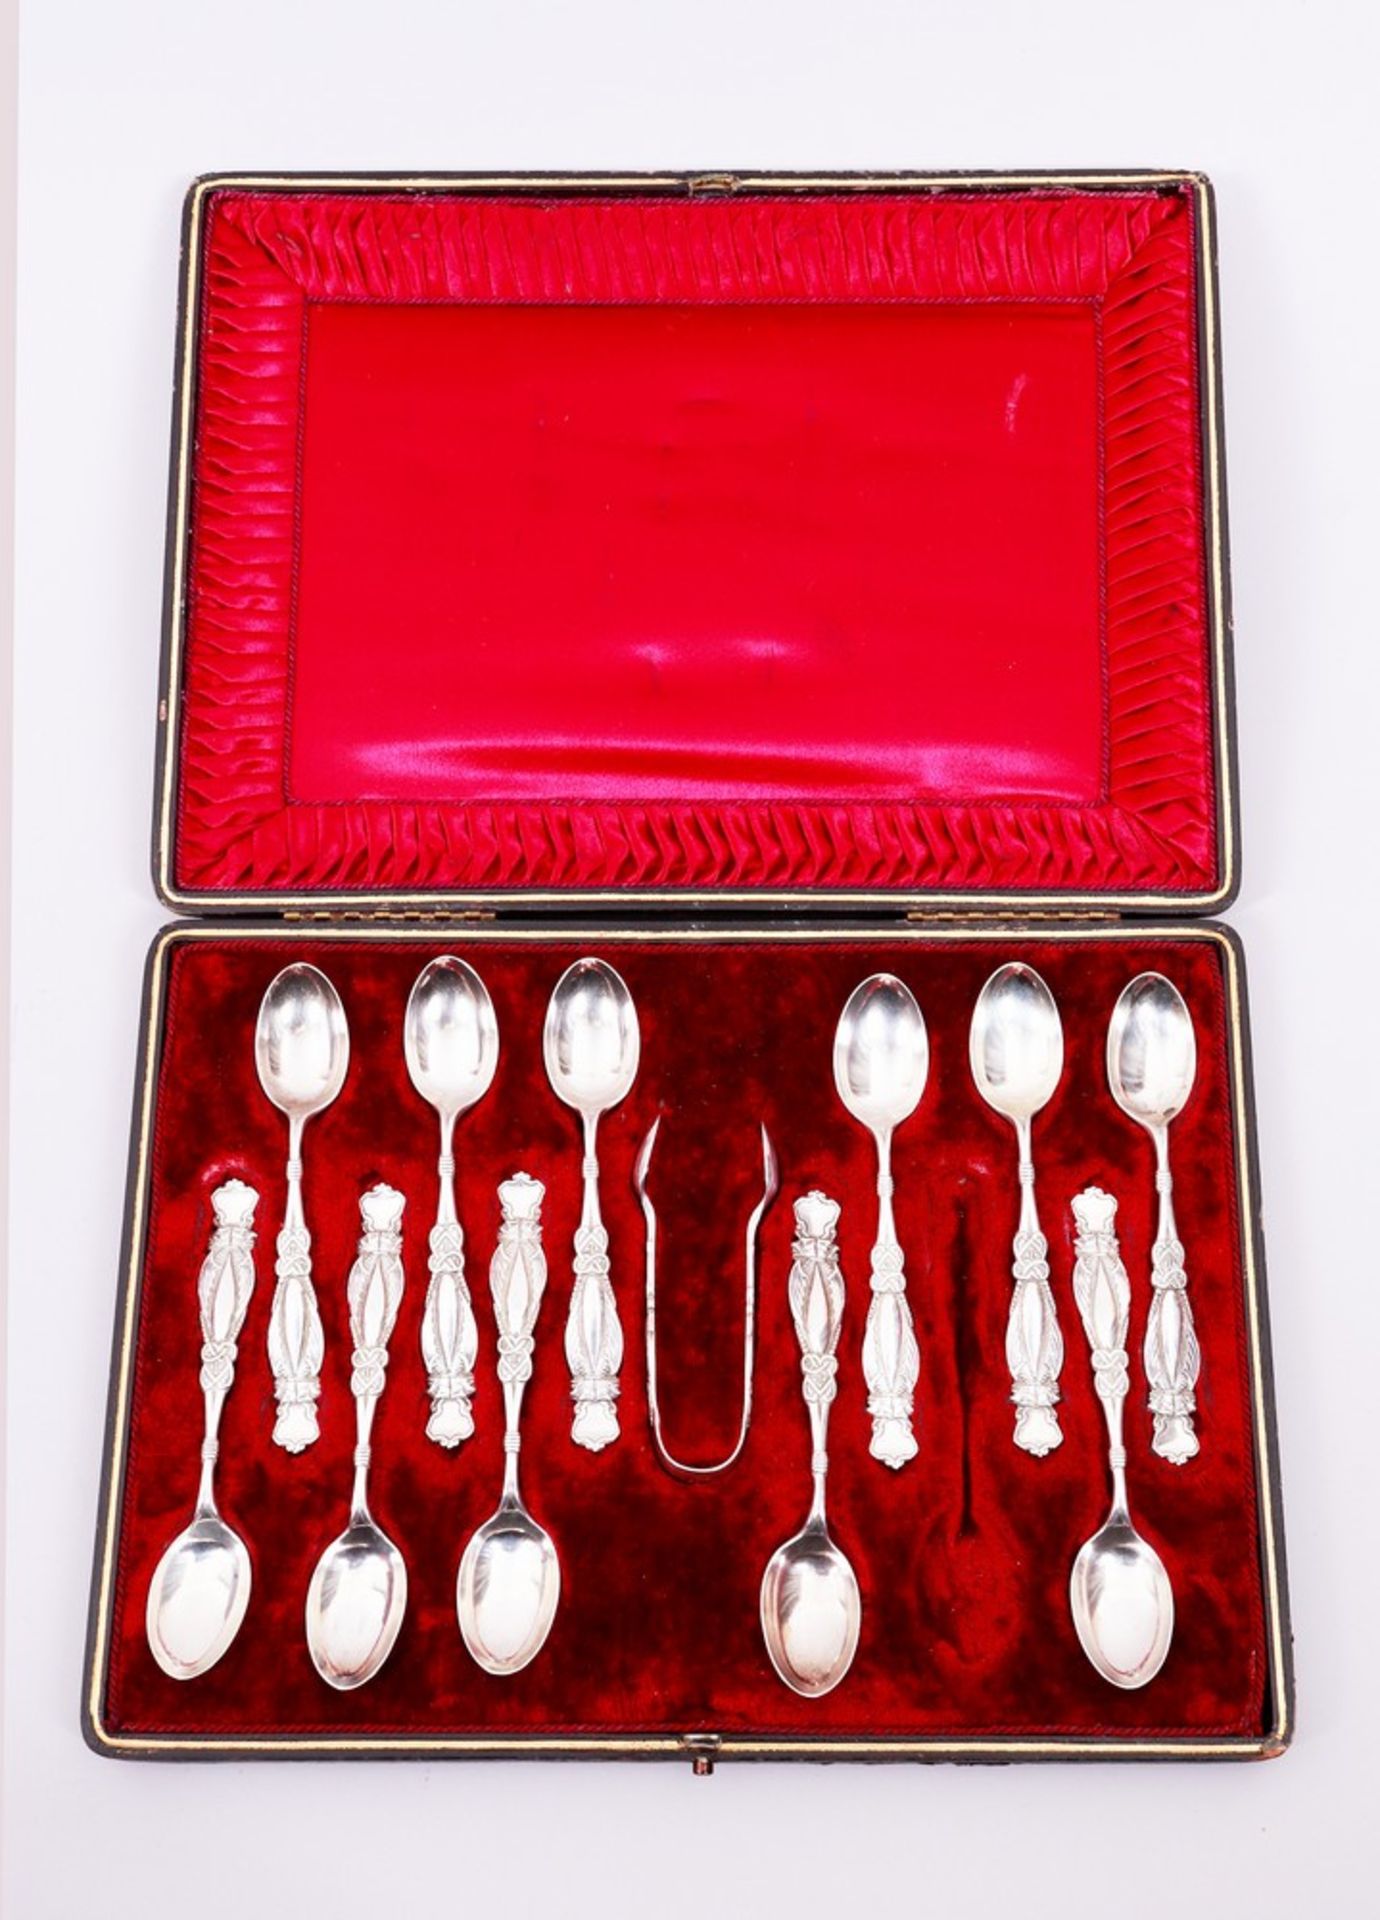 11 coffee spoons and sugar tongs in box, 925 silver, John William Caldicott, Birmingham, c. 1890-91 - Image 8 of 8